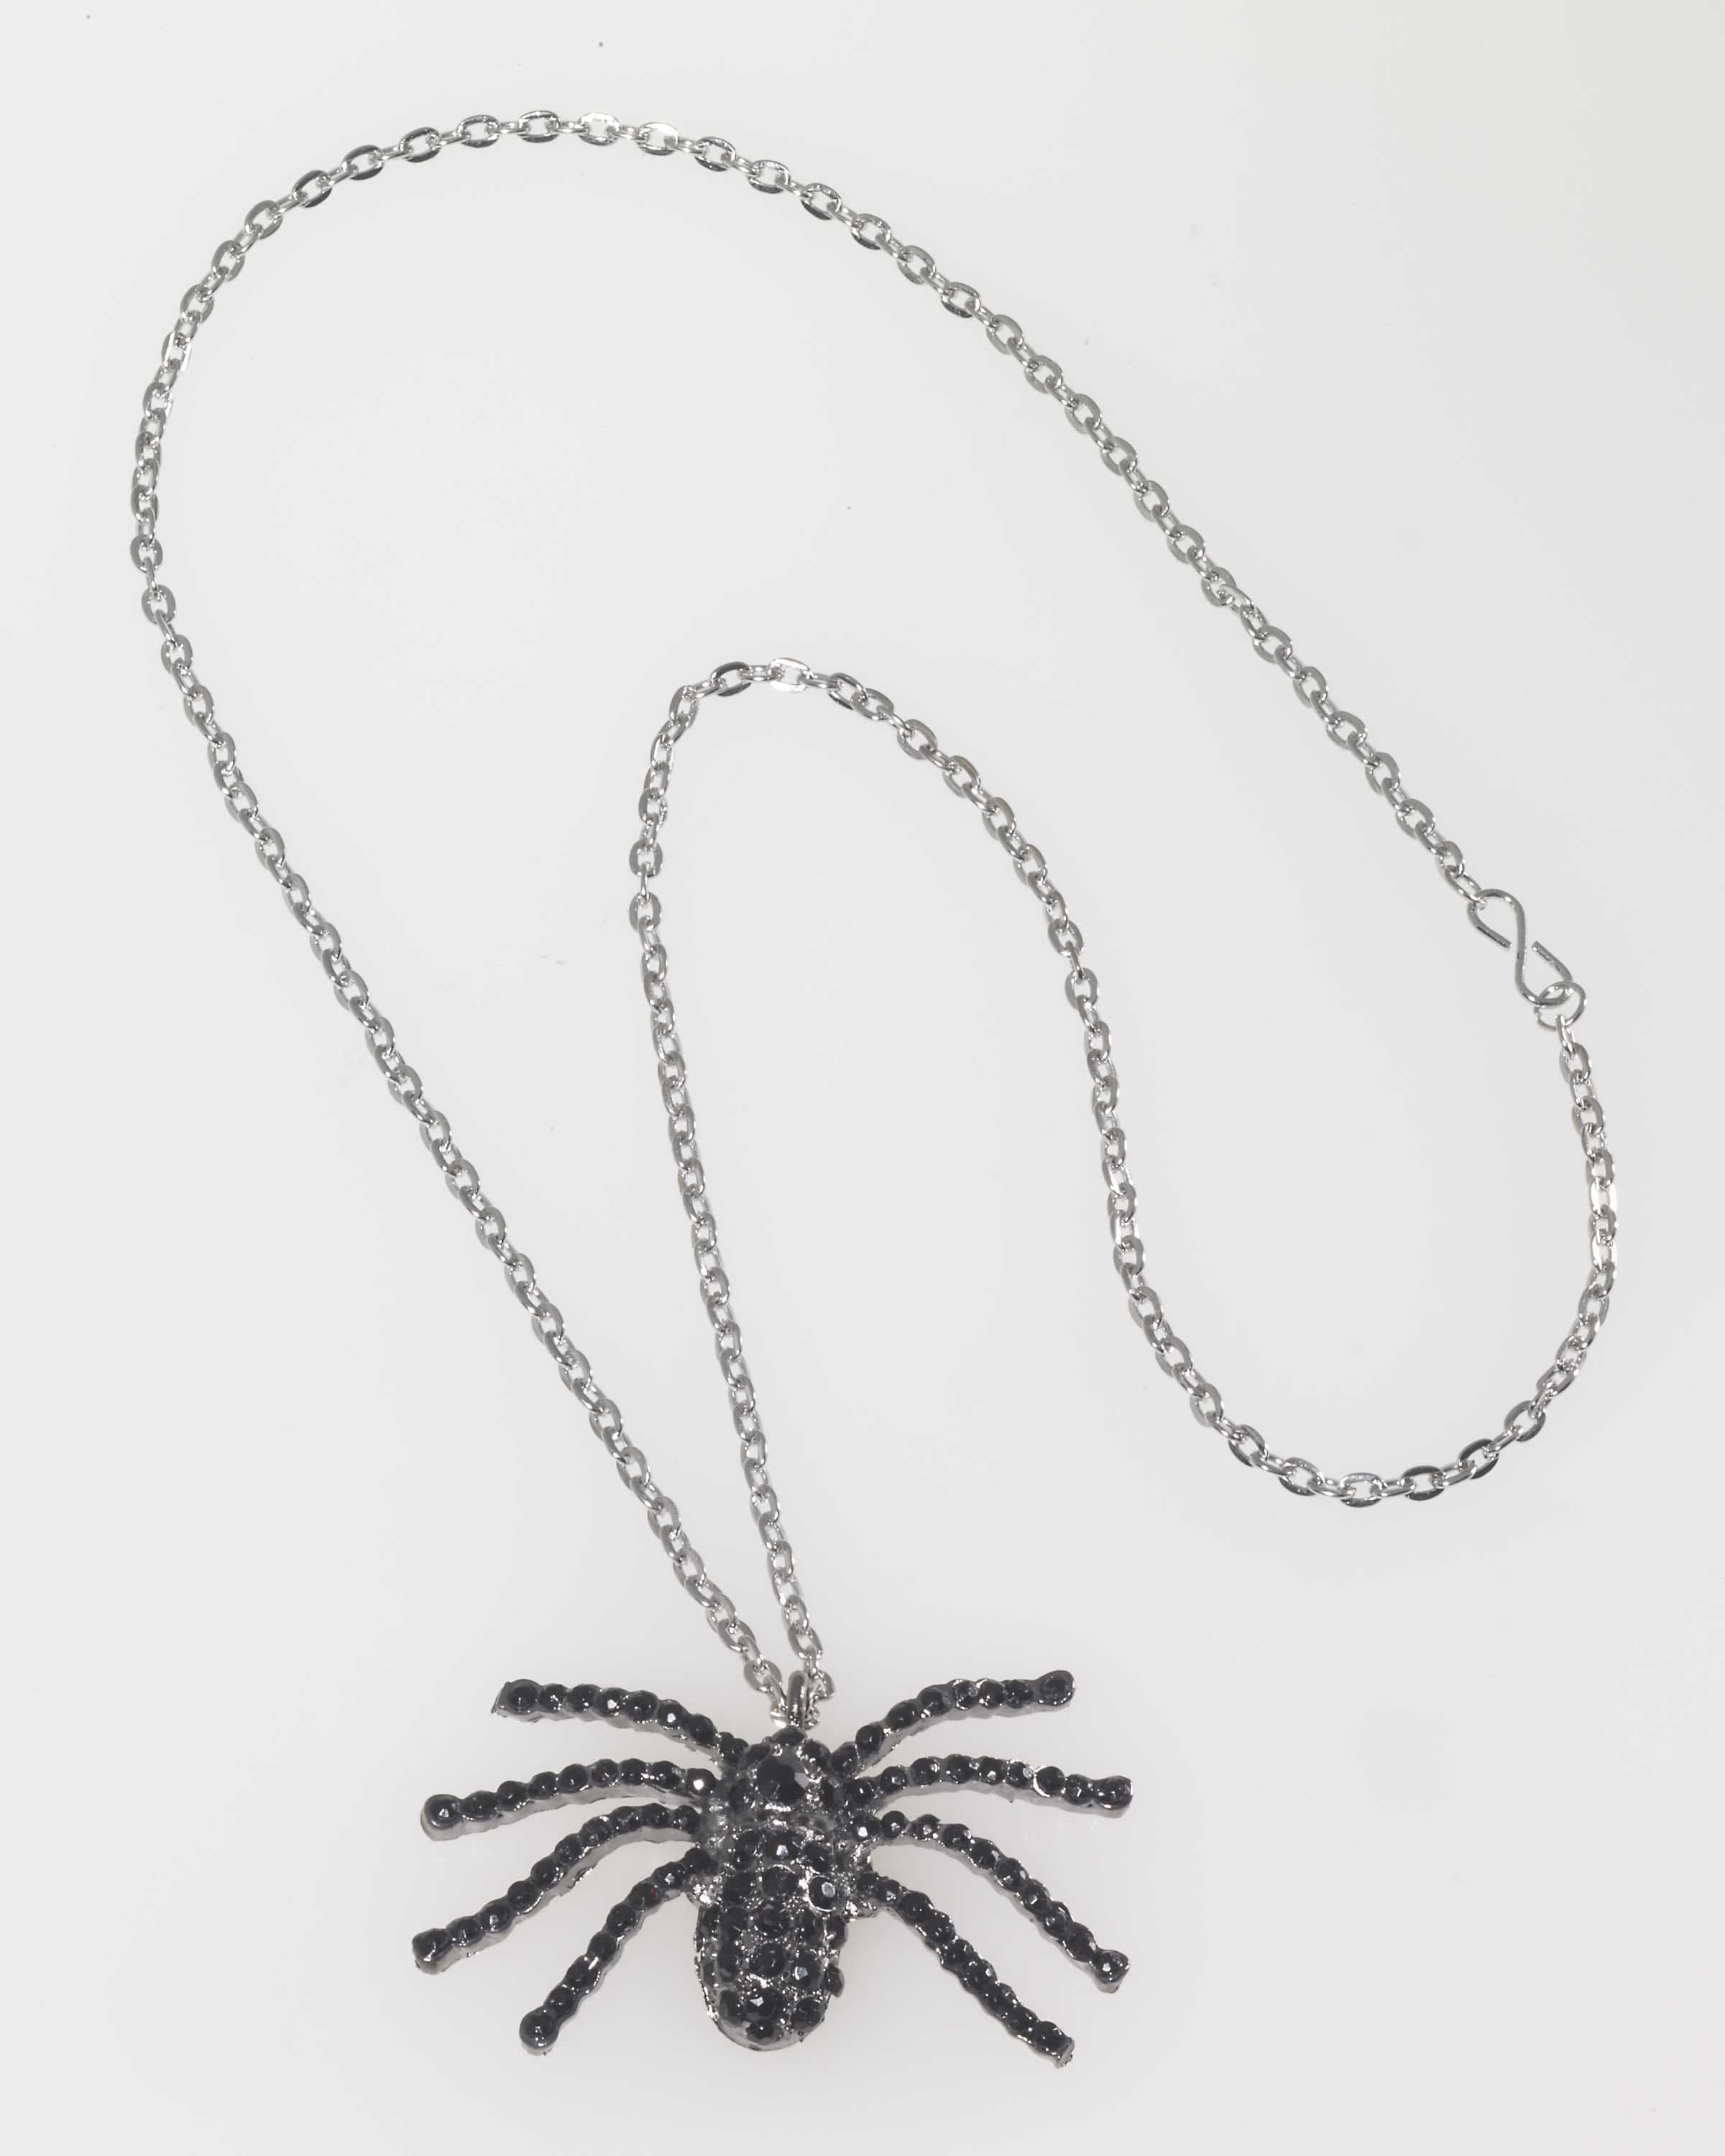 Black Widow Necklace - costumes.com